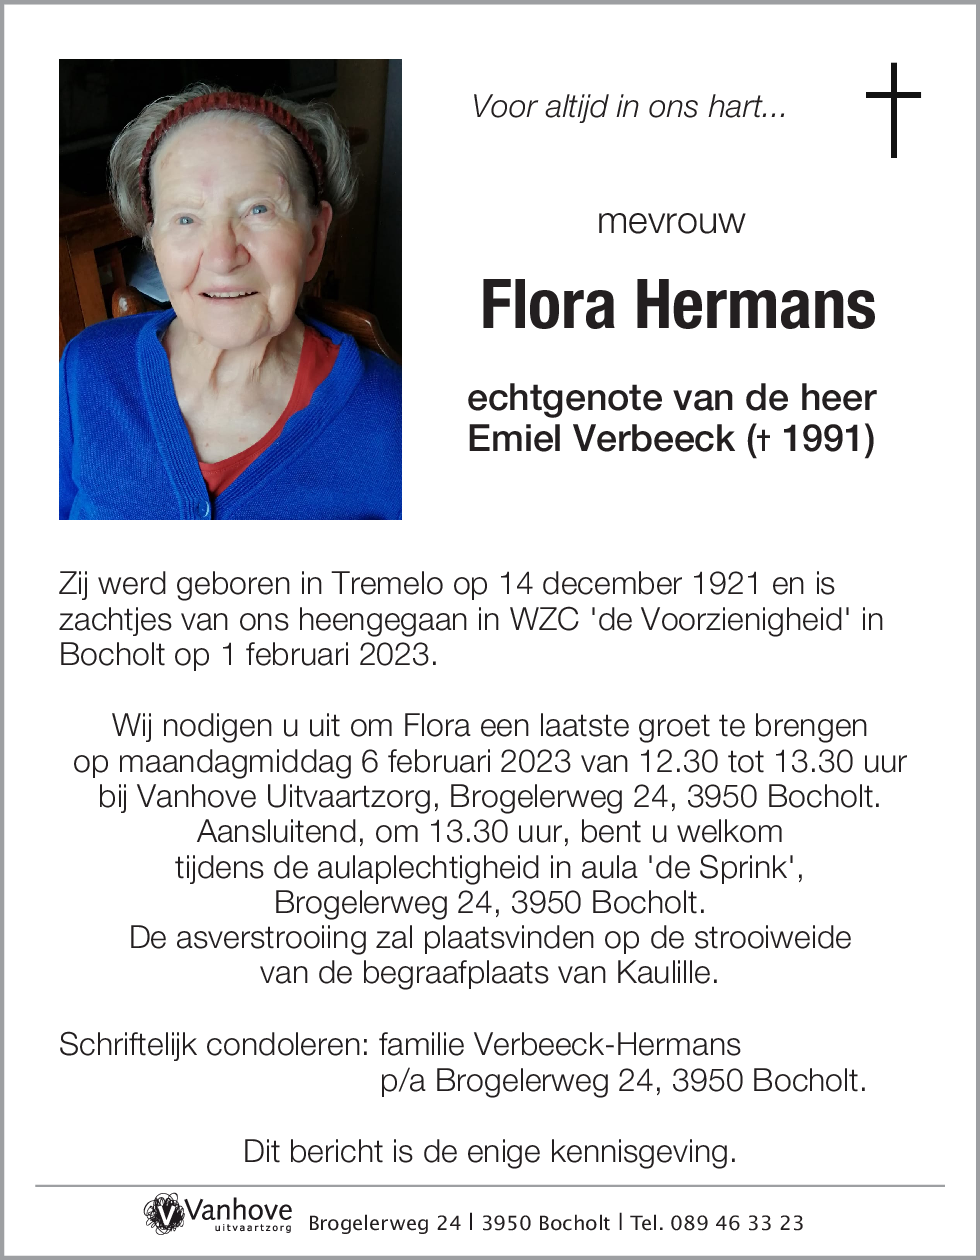 Flora Hermans